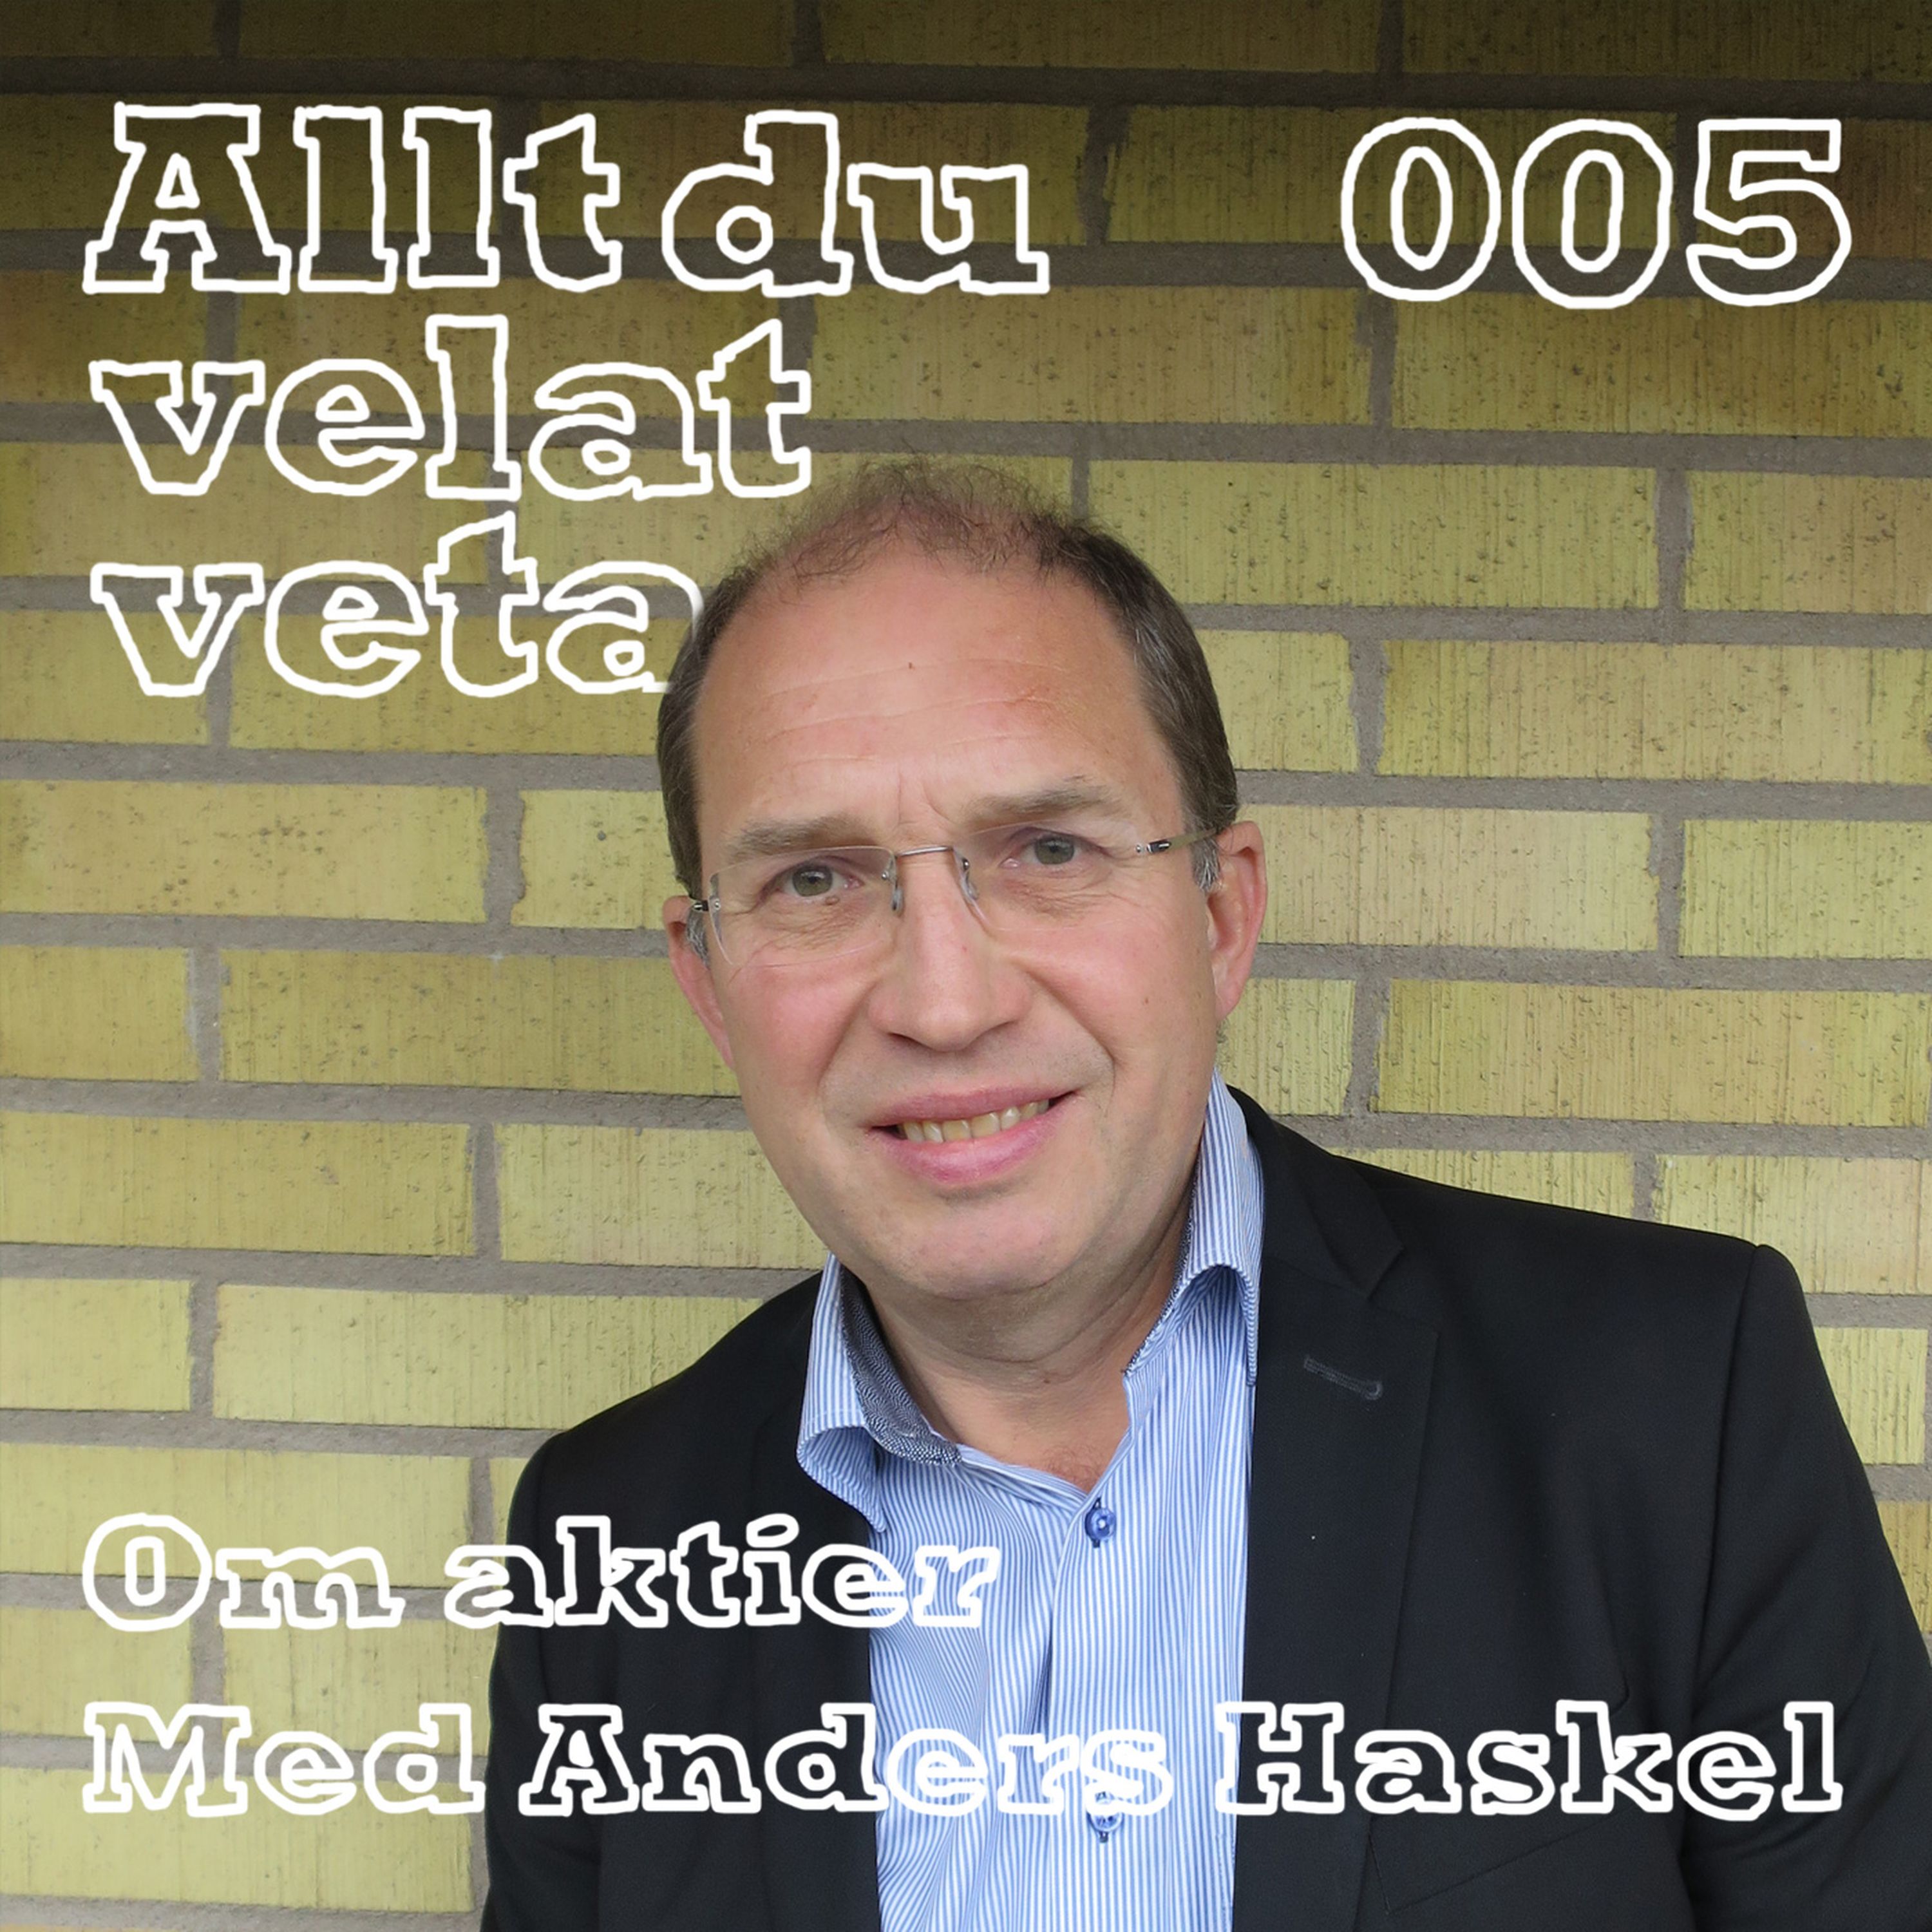 005 Om aktier med Anders Haskel